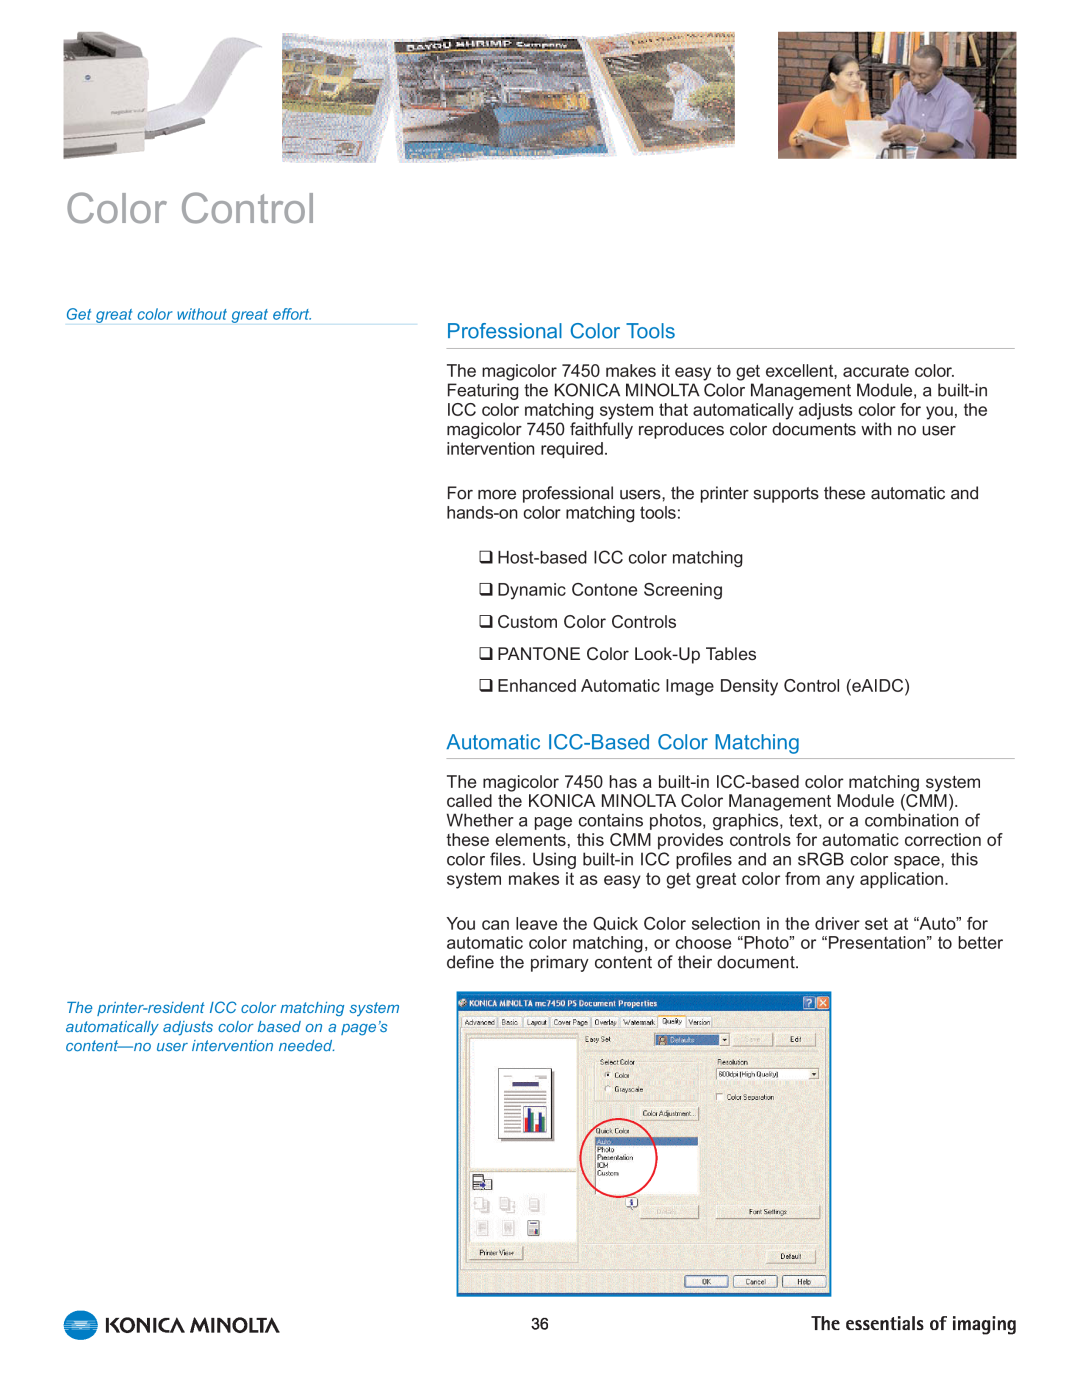 Konica Minolta 7450 manual Color Control, Professional Color Tools, Automatic ICC-BasedColor Matching 